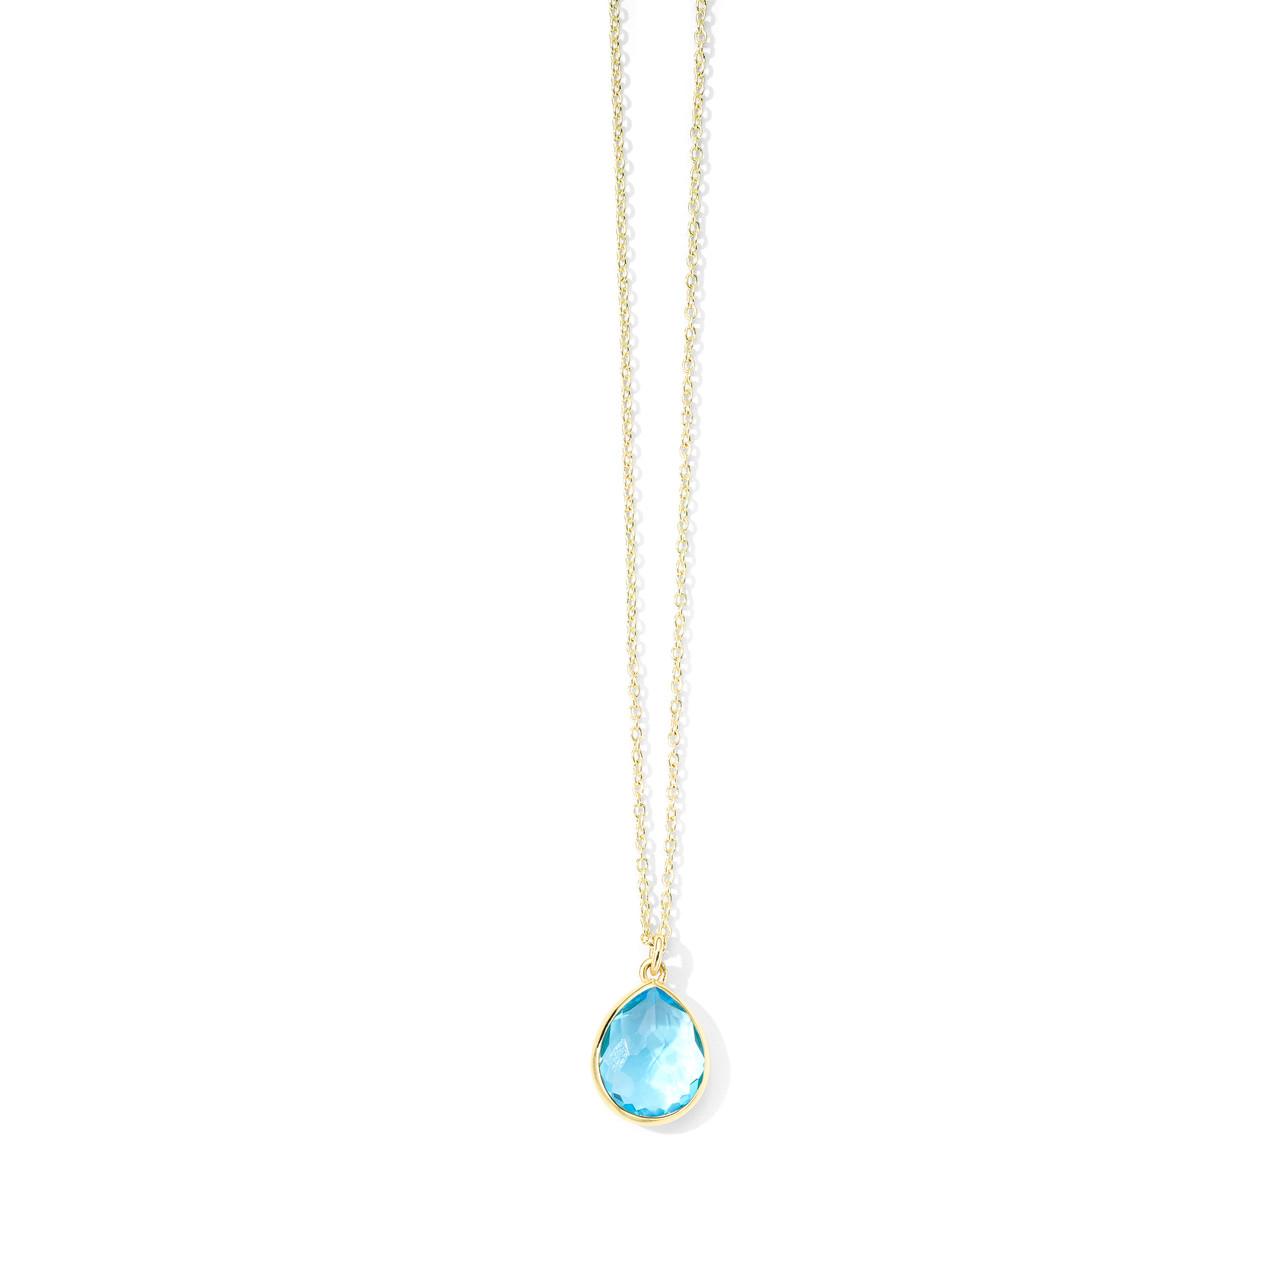 Ippolita Rock Candy Mini Teardrop 18k Gold Pendant Necklace with Blue Topaz